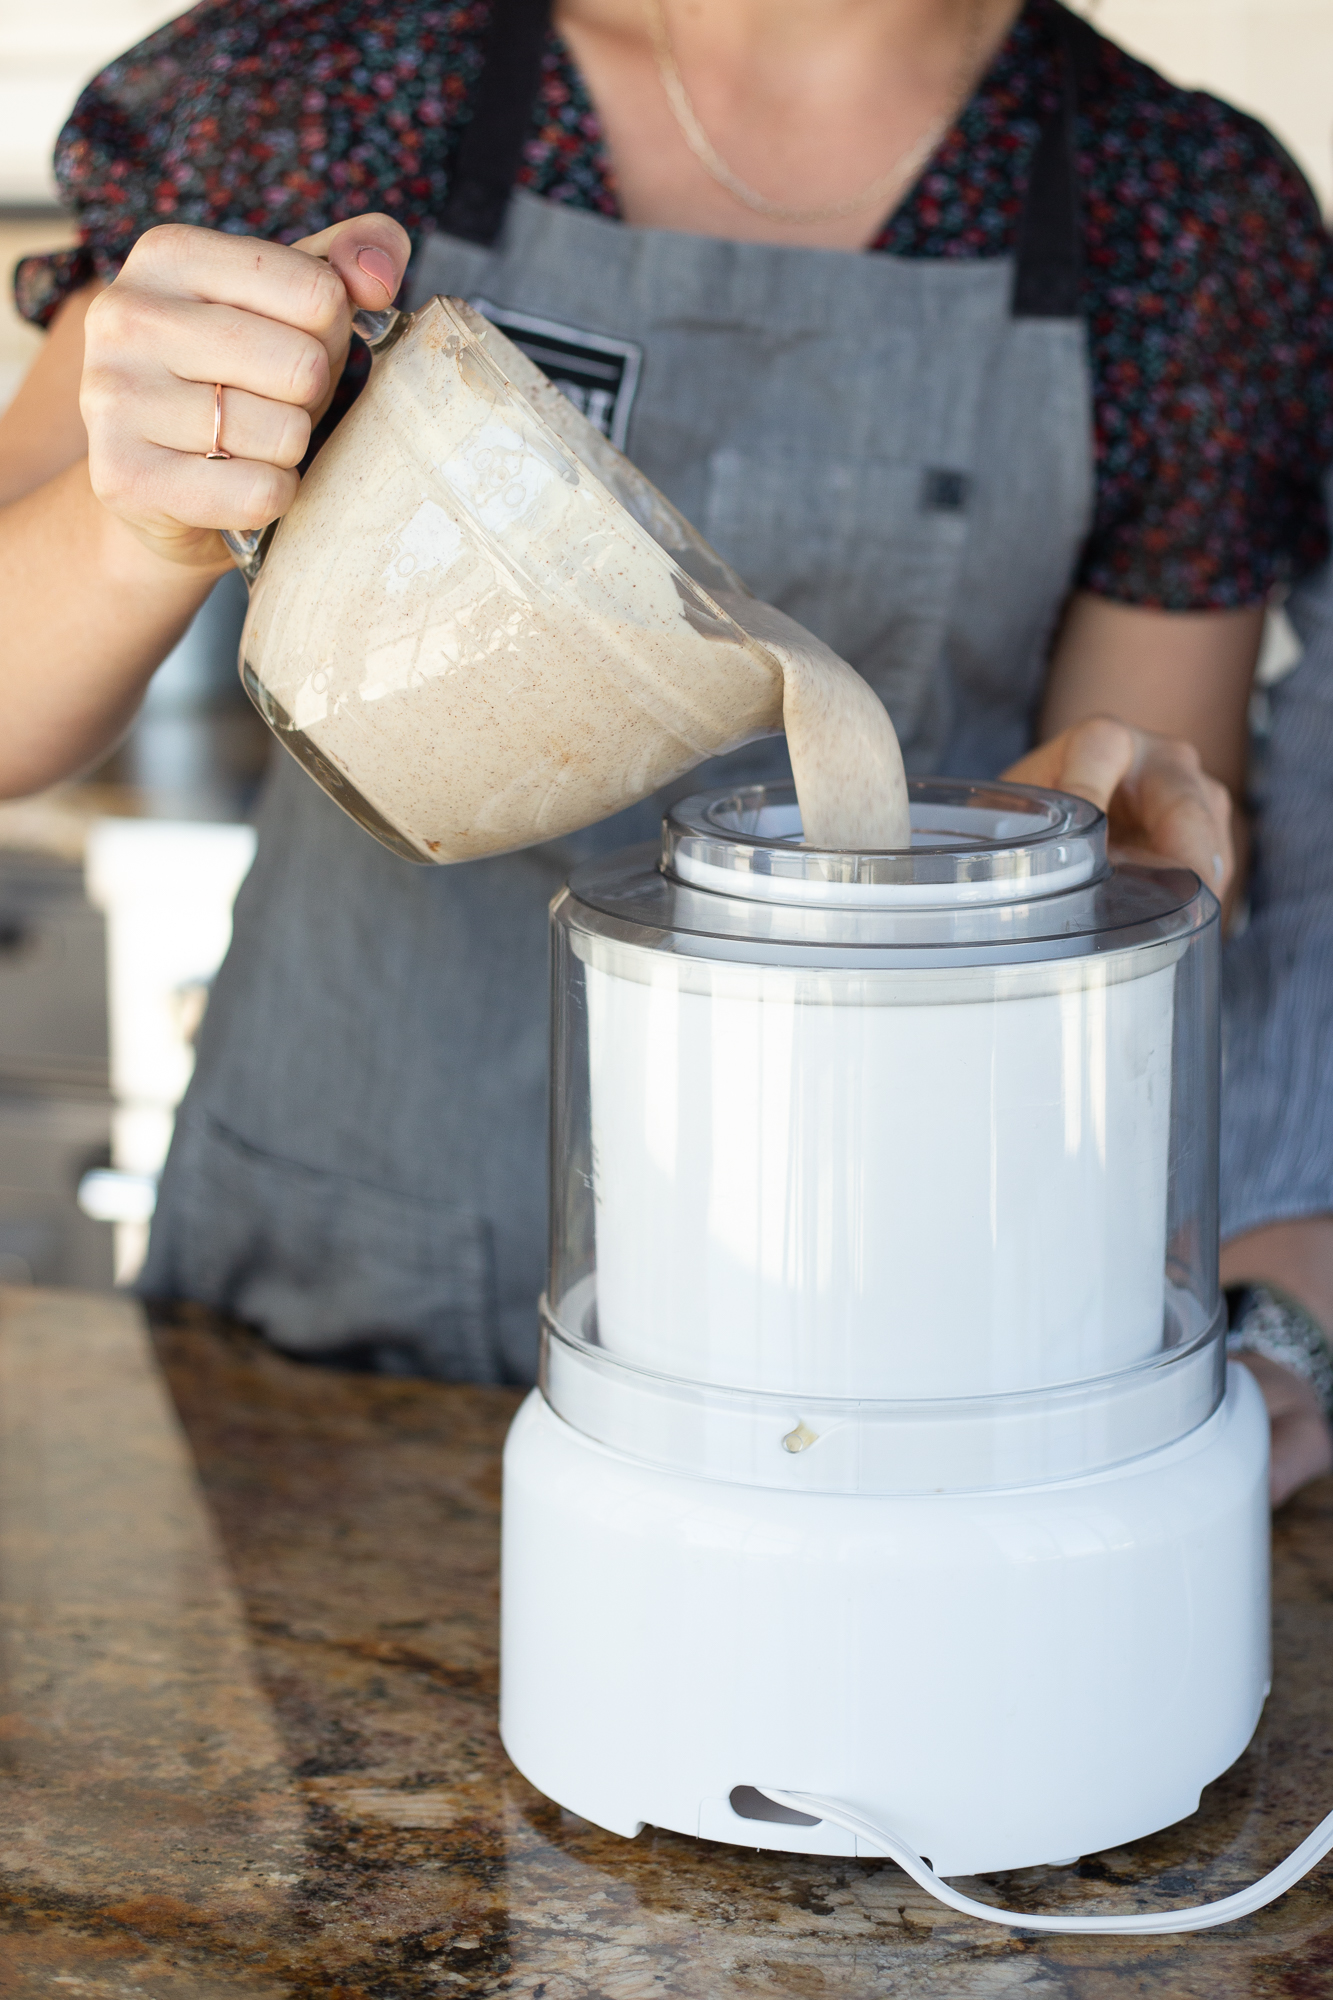 The New KitchenAid Ice Cream Maker Attachment Makes Summertime